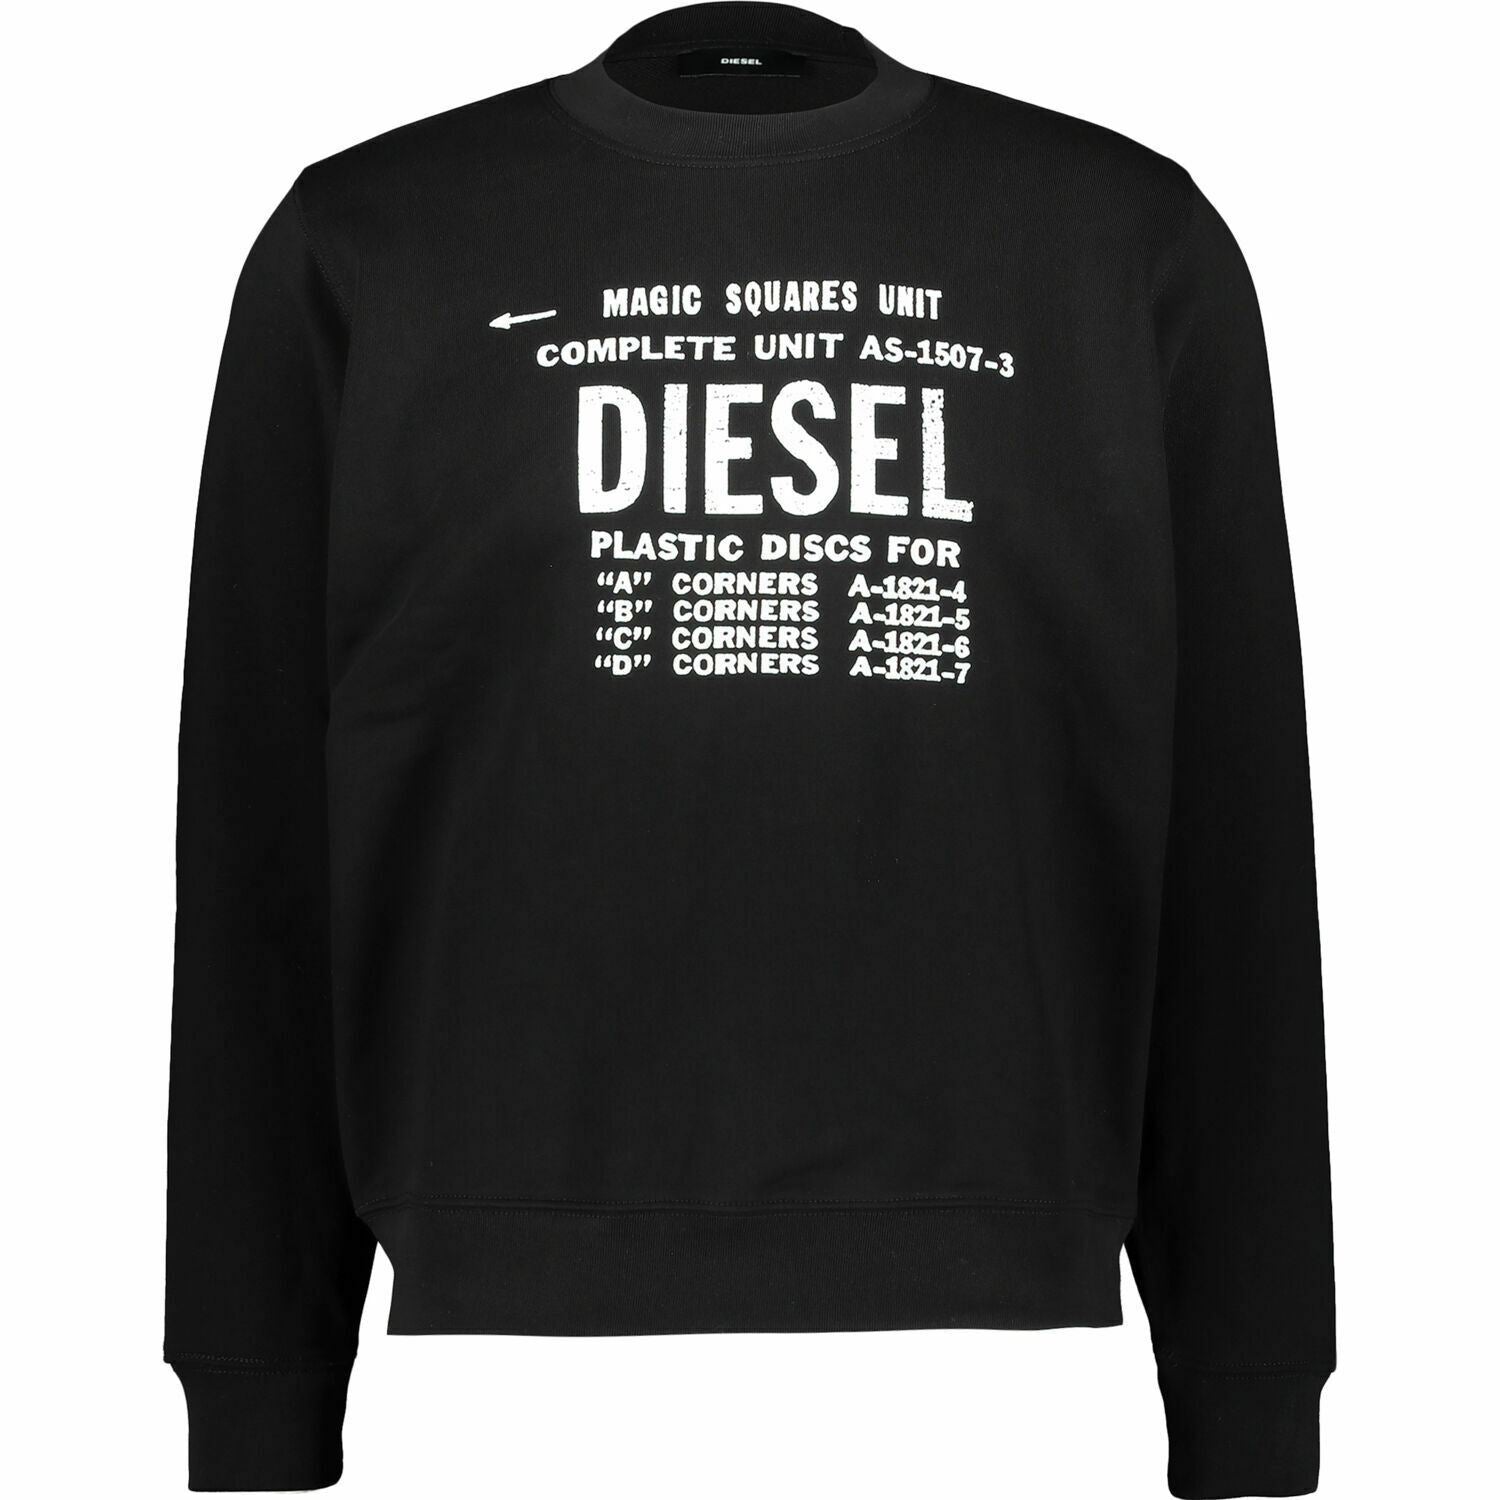 DIESEL Women's ANG-A Sweatshirt, 100% Cotton, Black, size Large